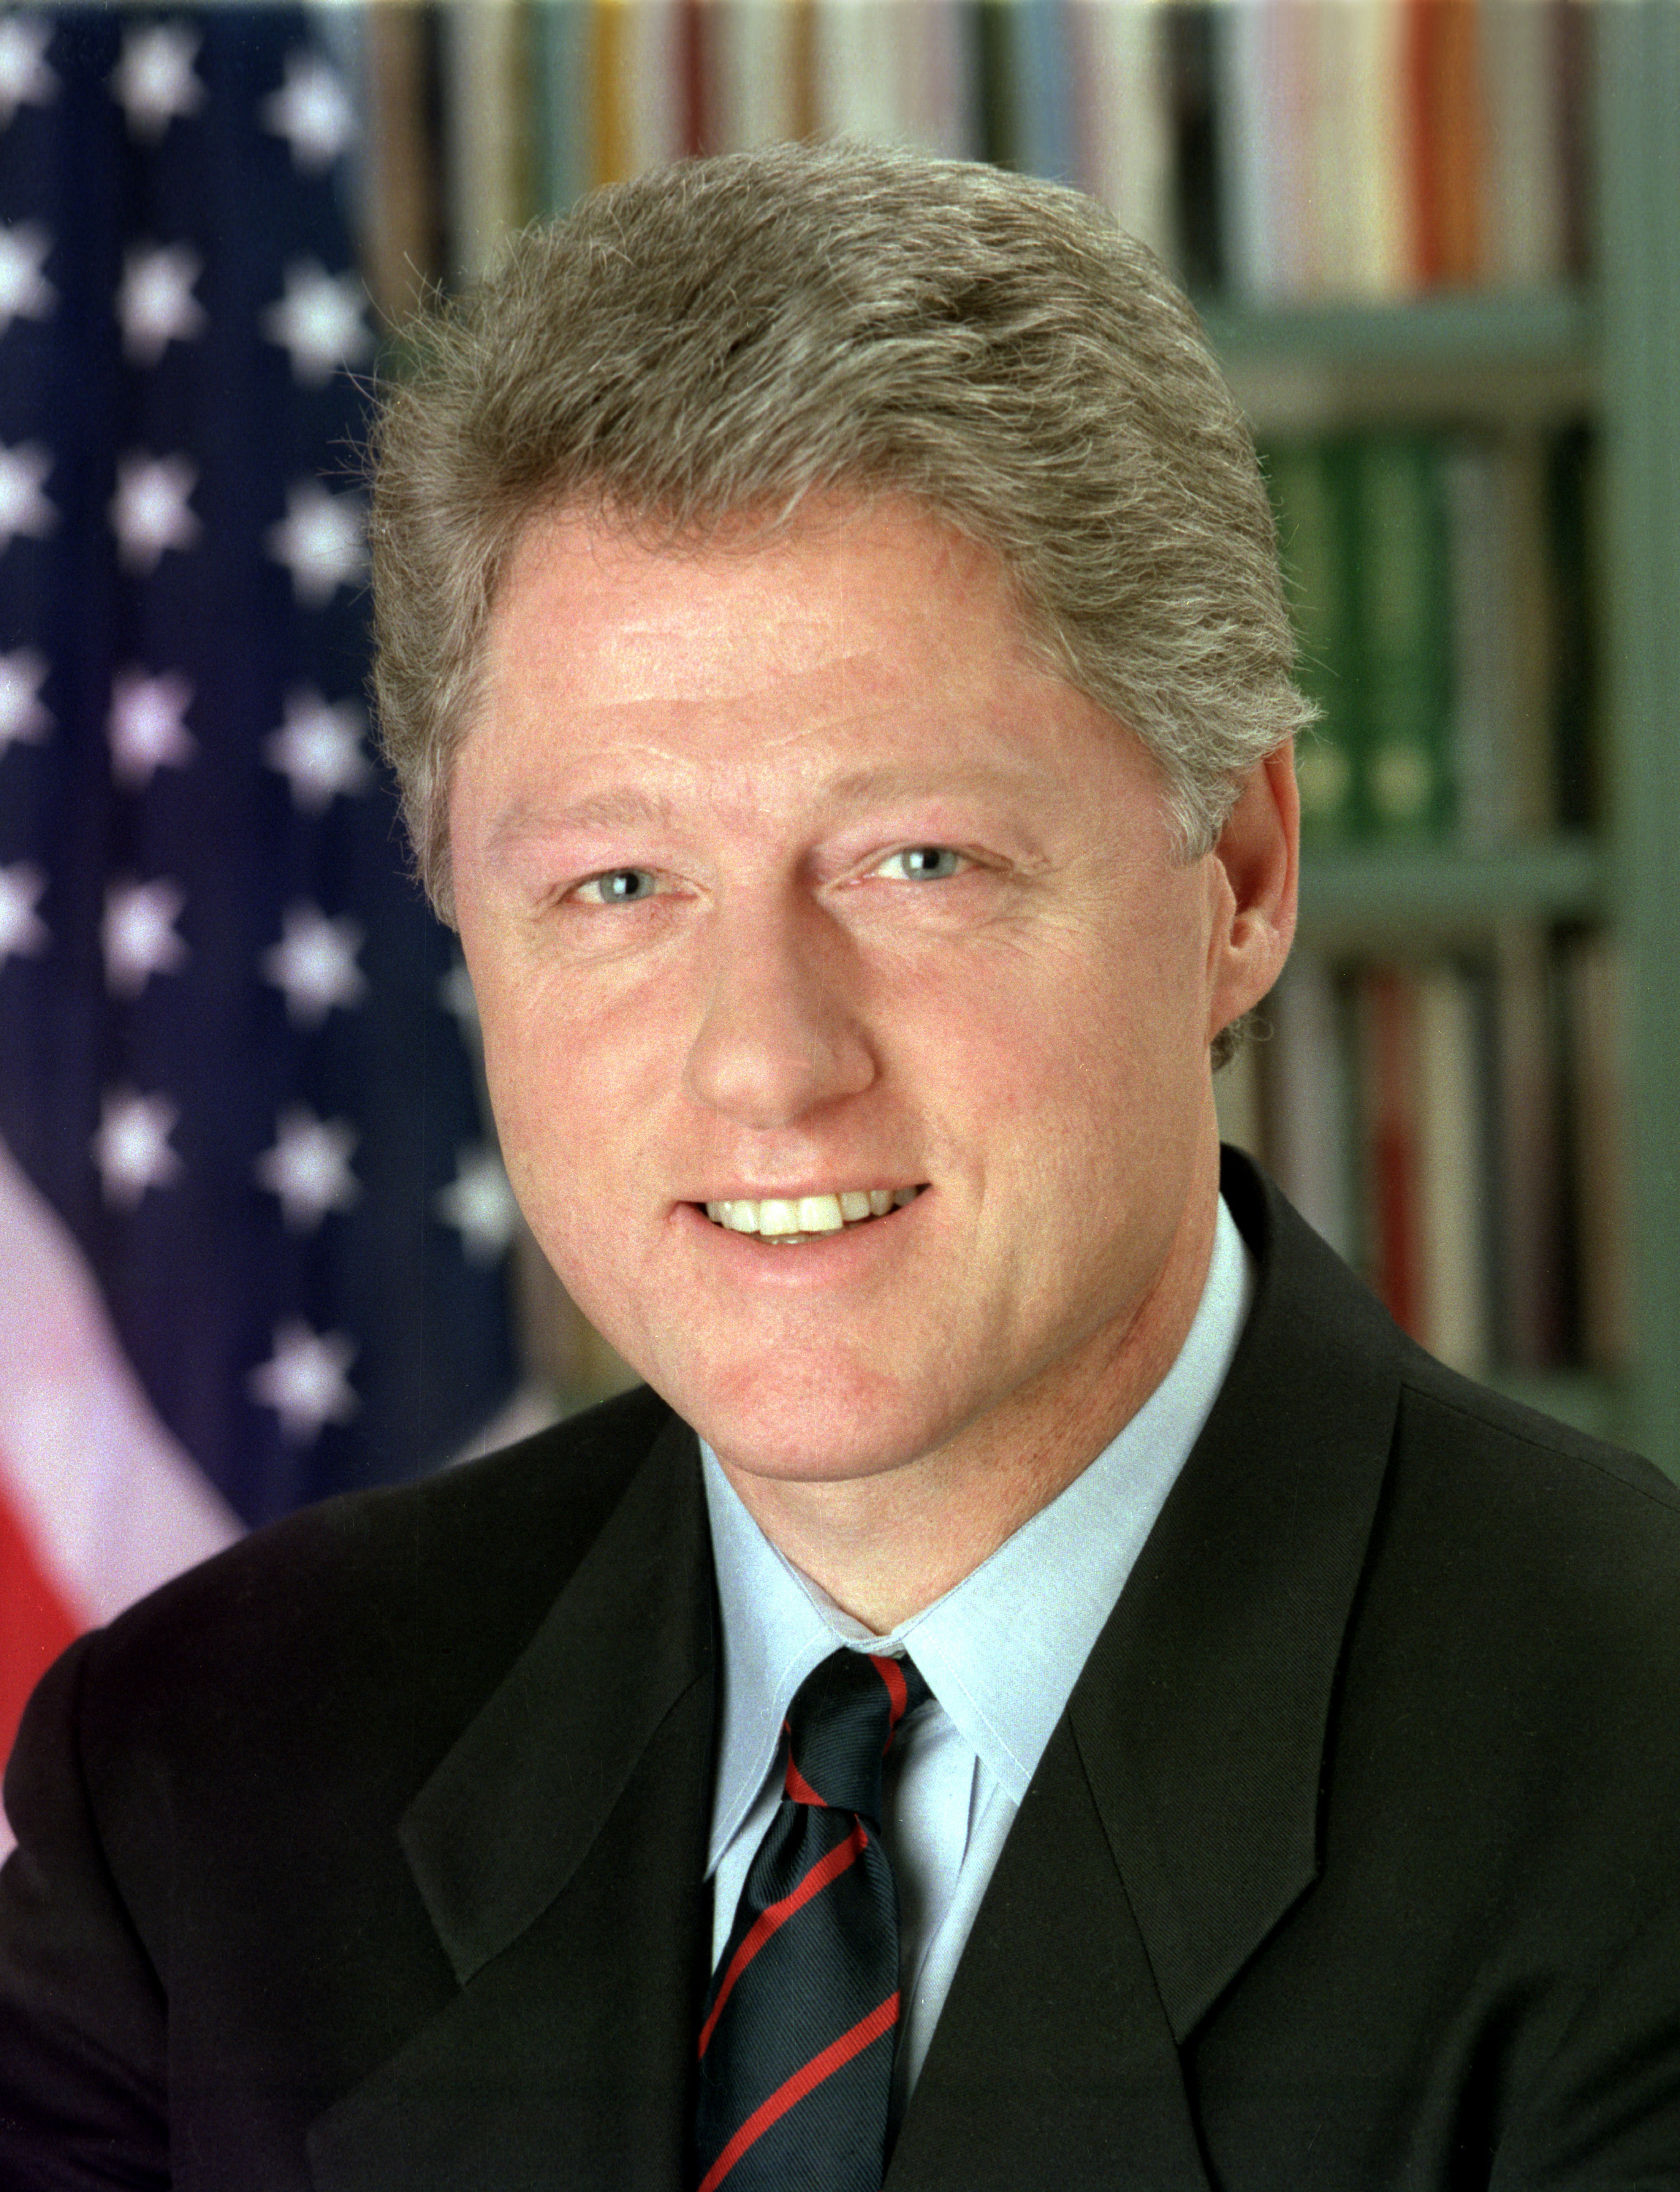 Реферат: Bill Clinton Essay Research Paper Bill Clinton